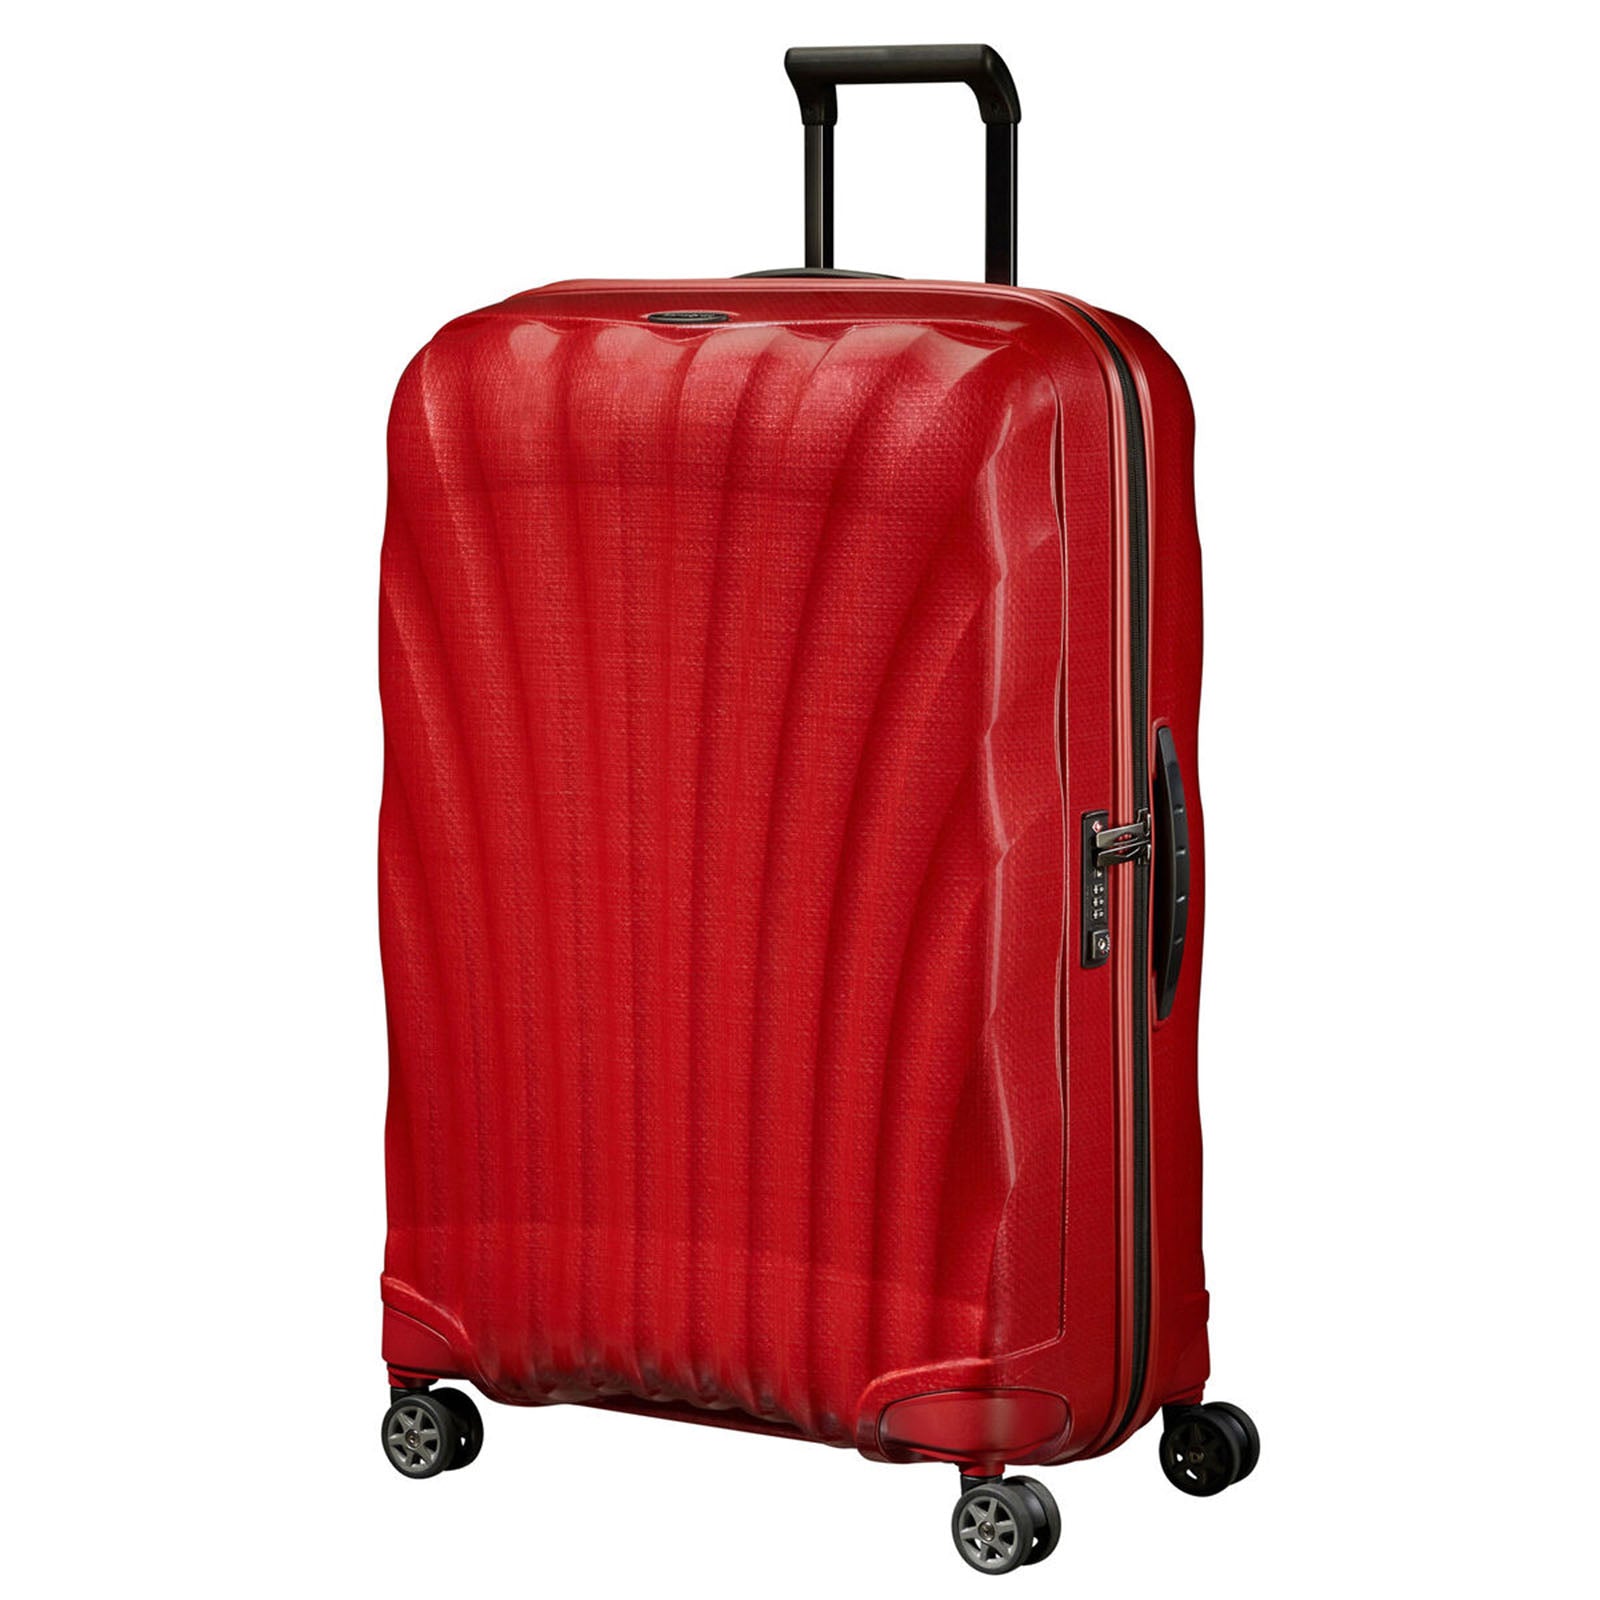 Samsonite-C-Lite-75cm-Suitcase-Chili-Red-Front-Angle